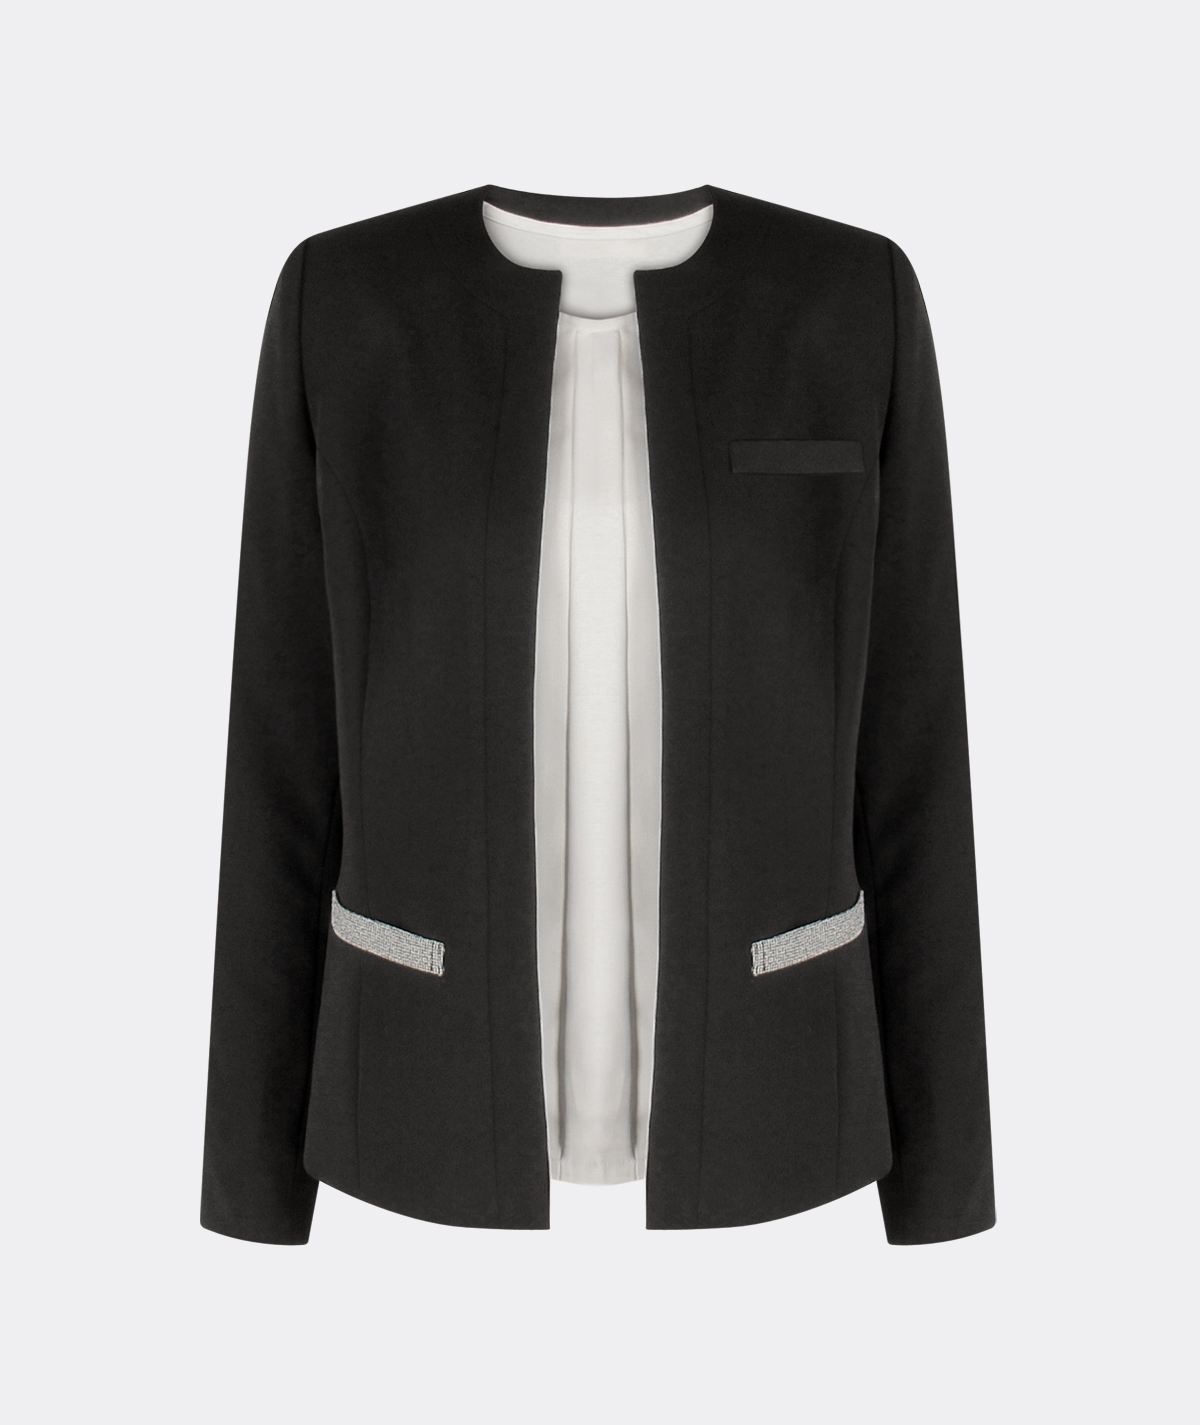 Minimalist Luxury Jacket for Retail executives - Modoleen